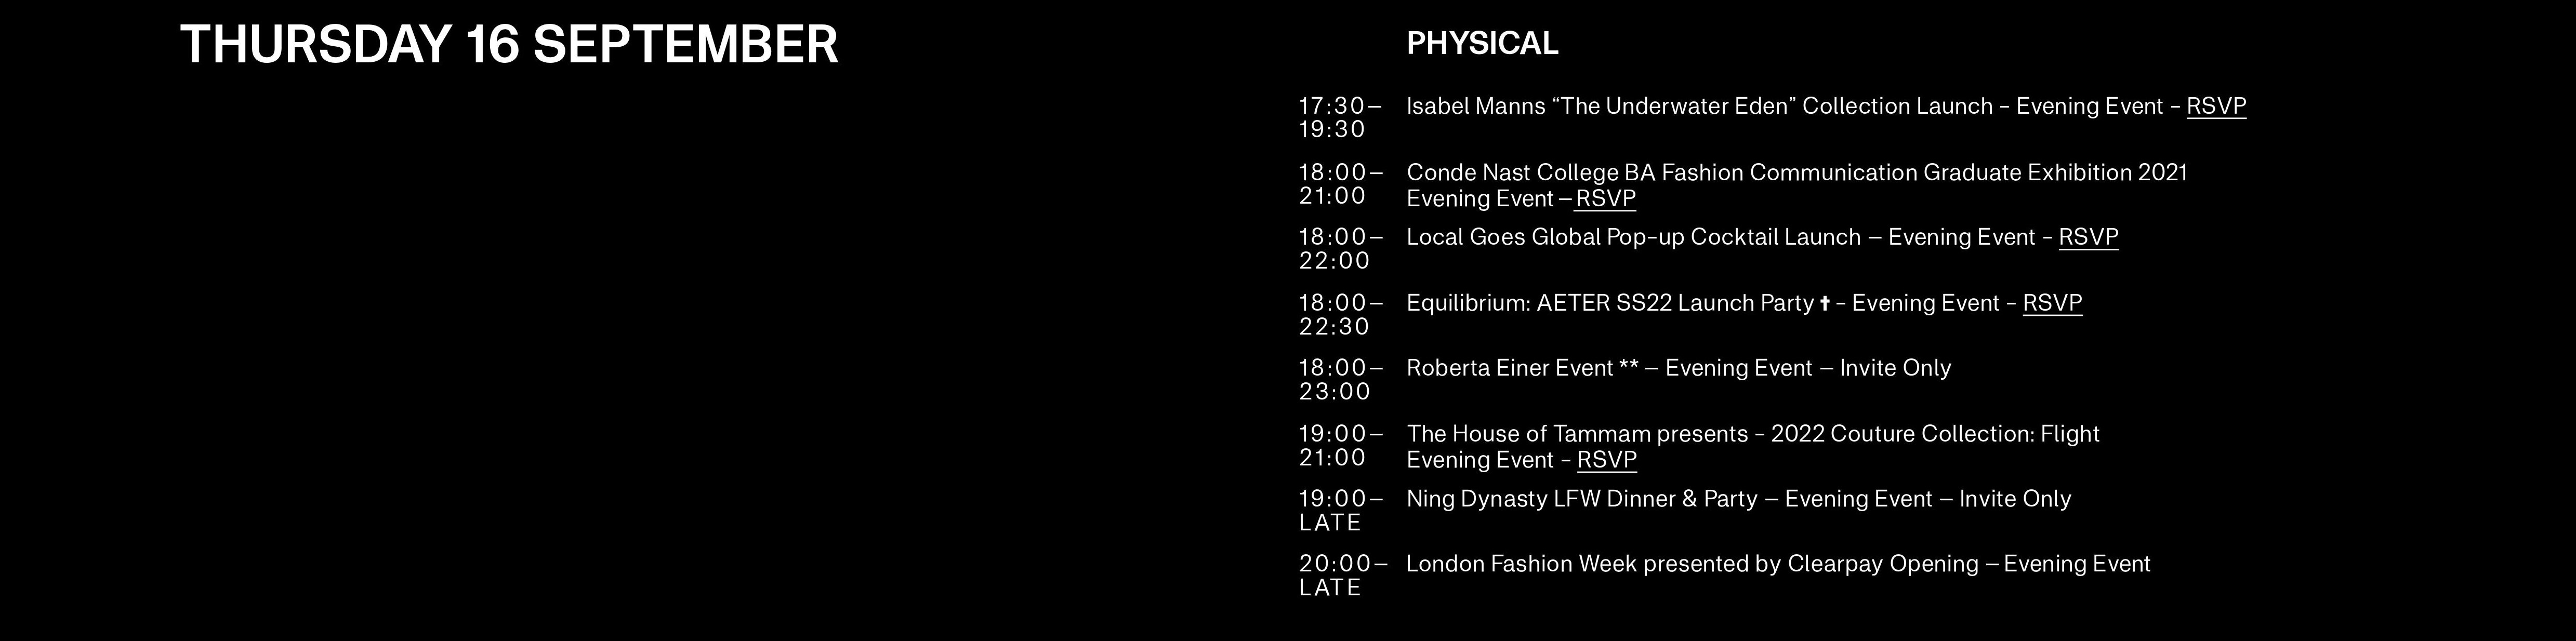 London Fashion Show Thursday 16th